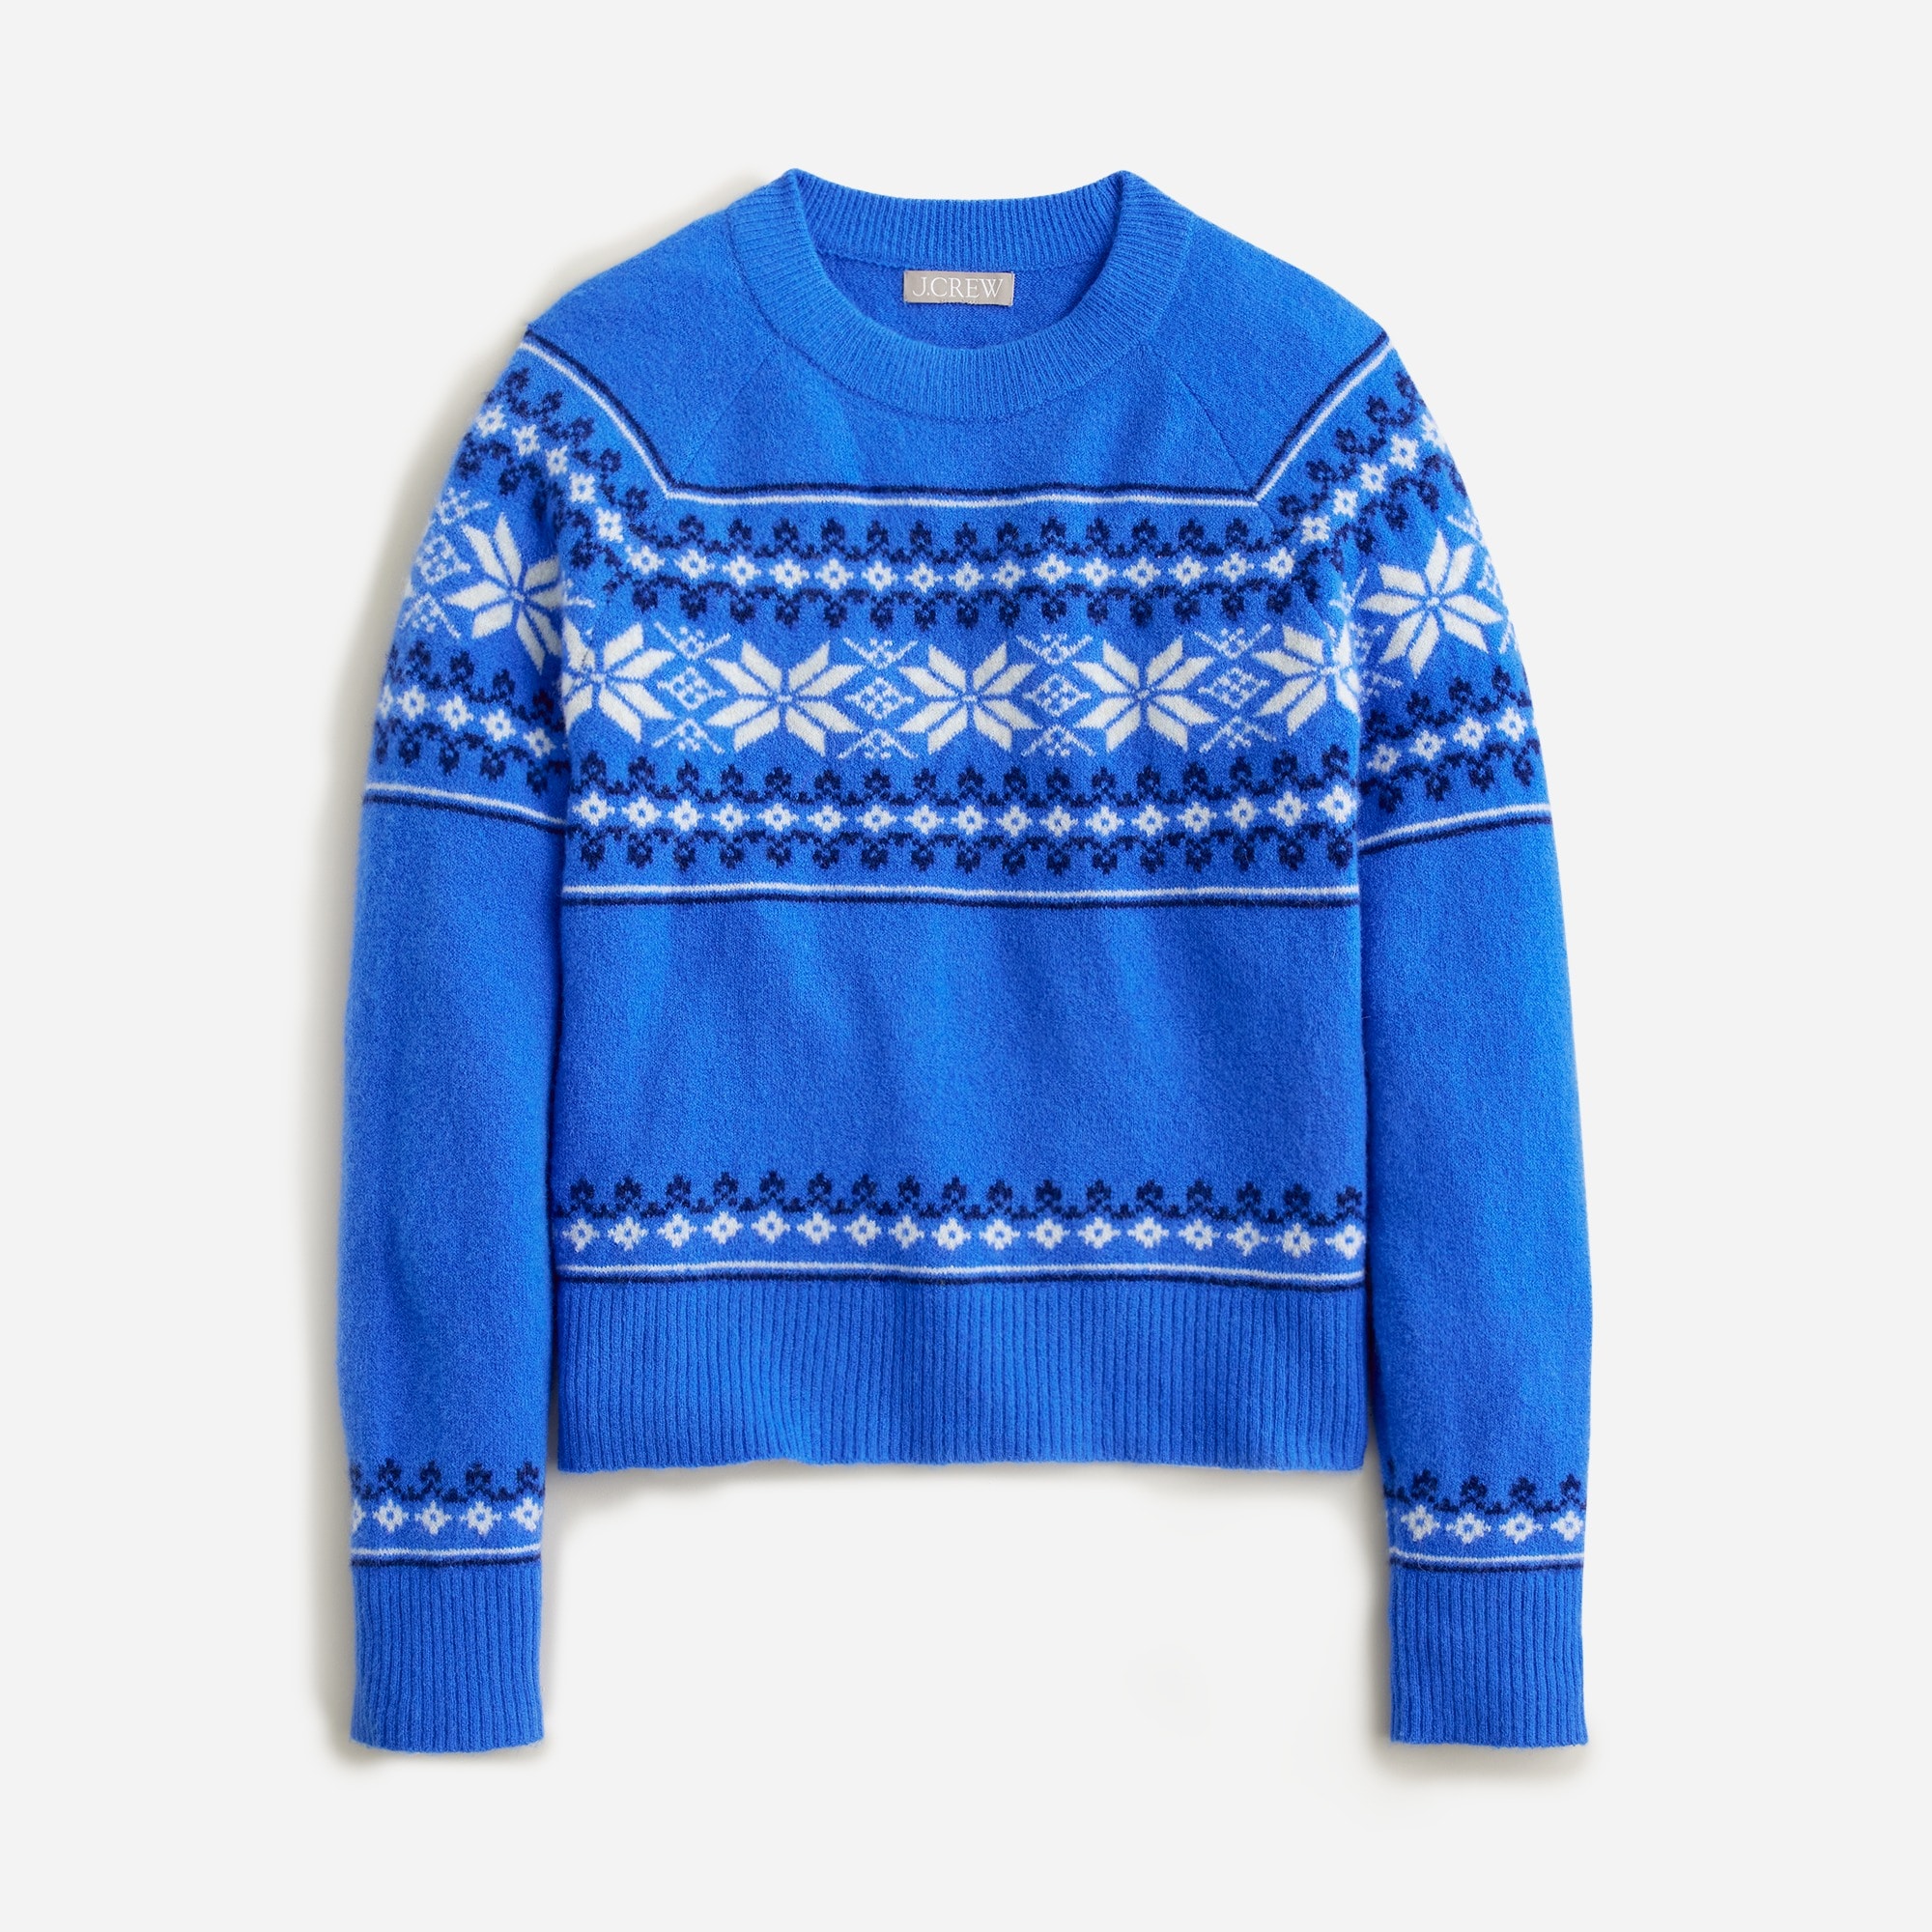  Fair Isle crewneck sweater in Supersoft yarn